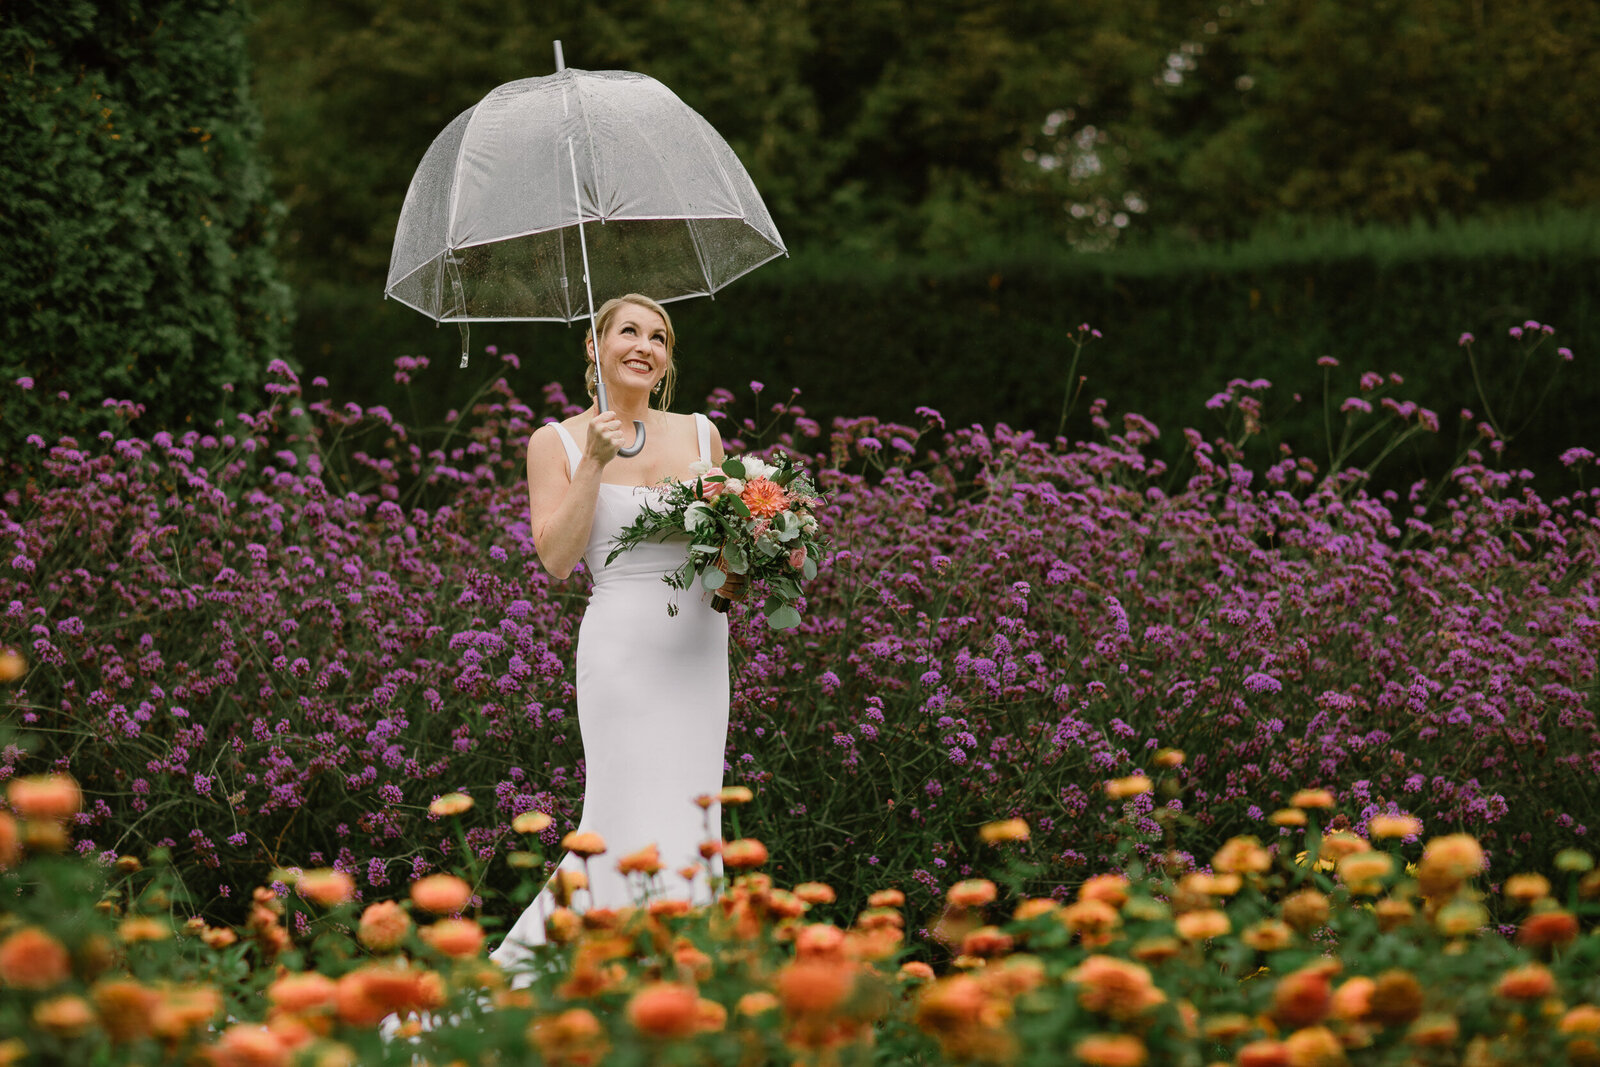 Bride standing in a colorful garden holding an umbrella.